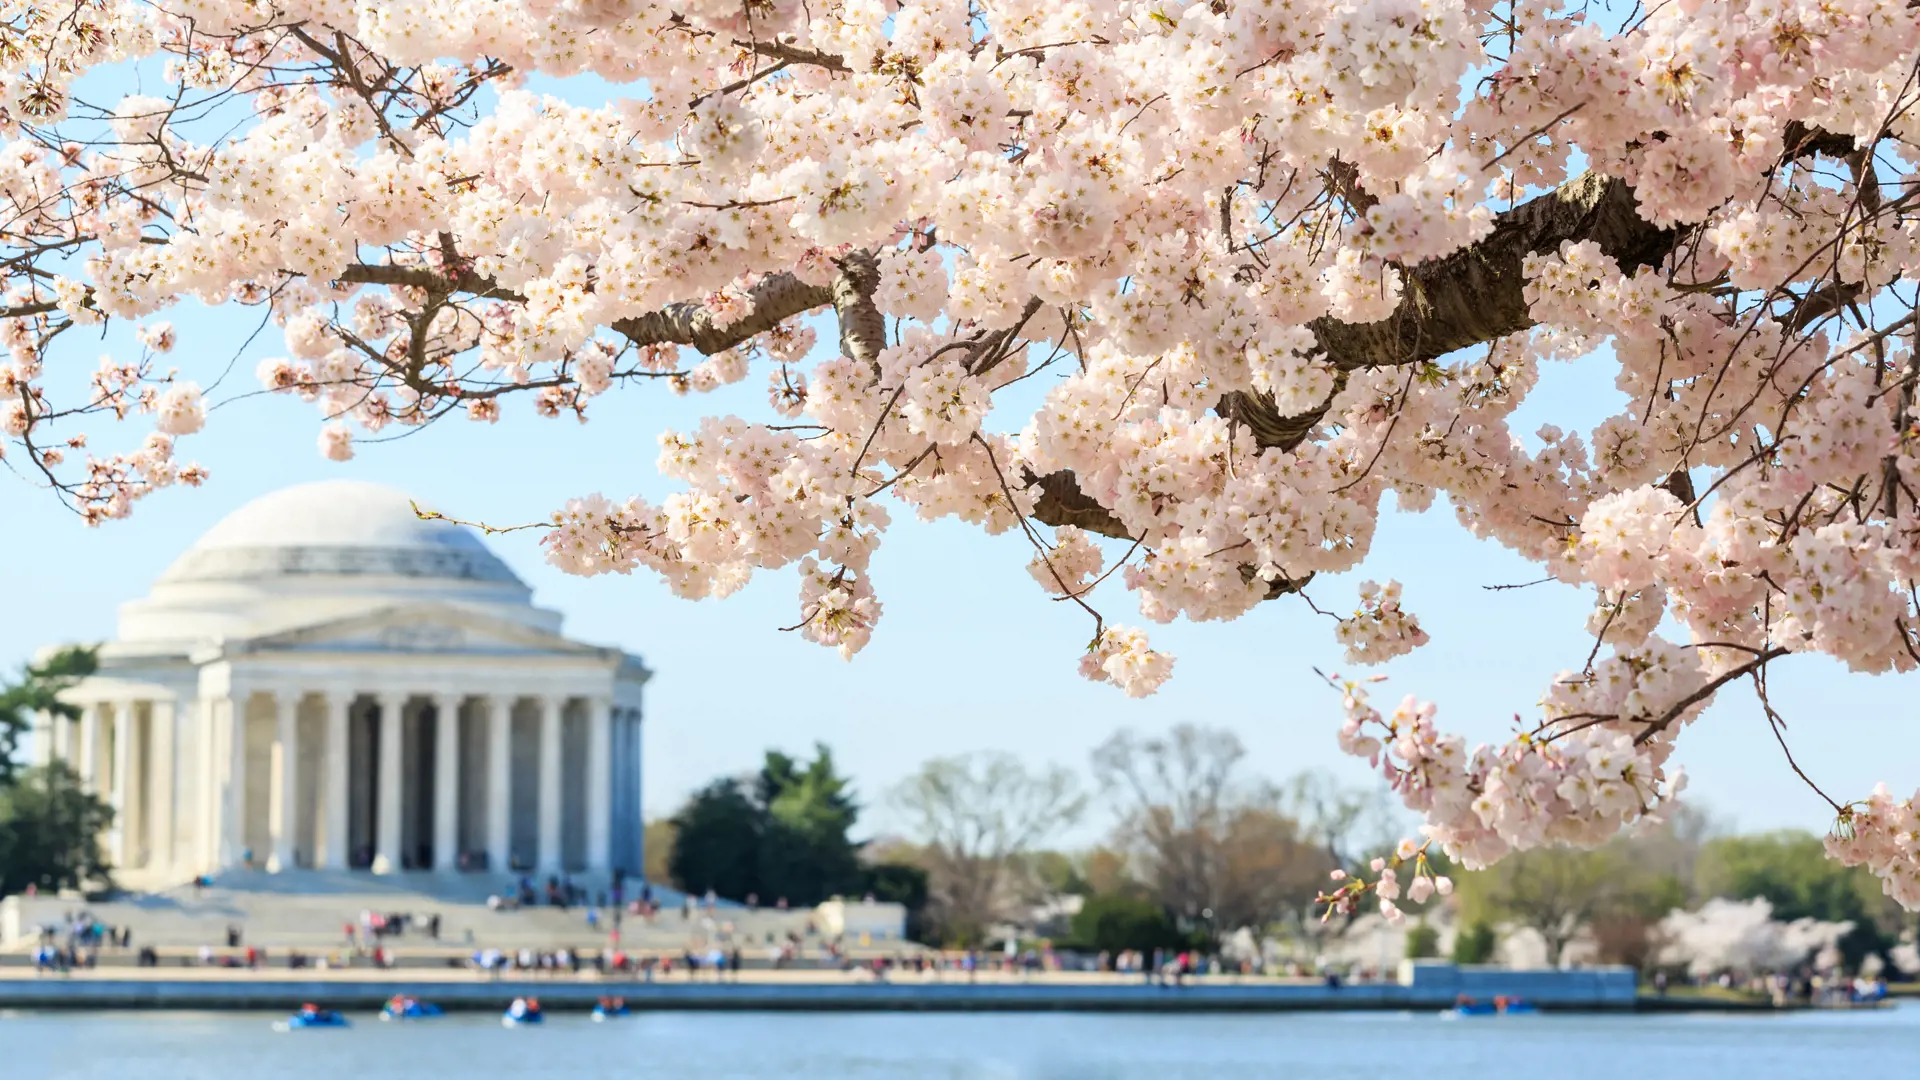 dag 1shutterstock_245218438 Thomas Jefferson Memorial in Washington DC, United States.jpg